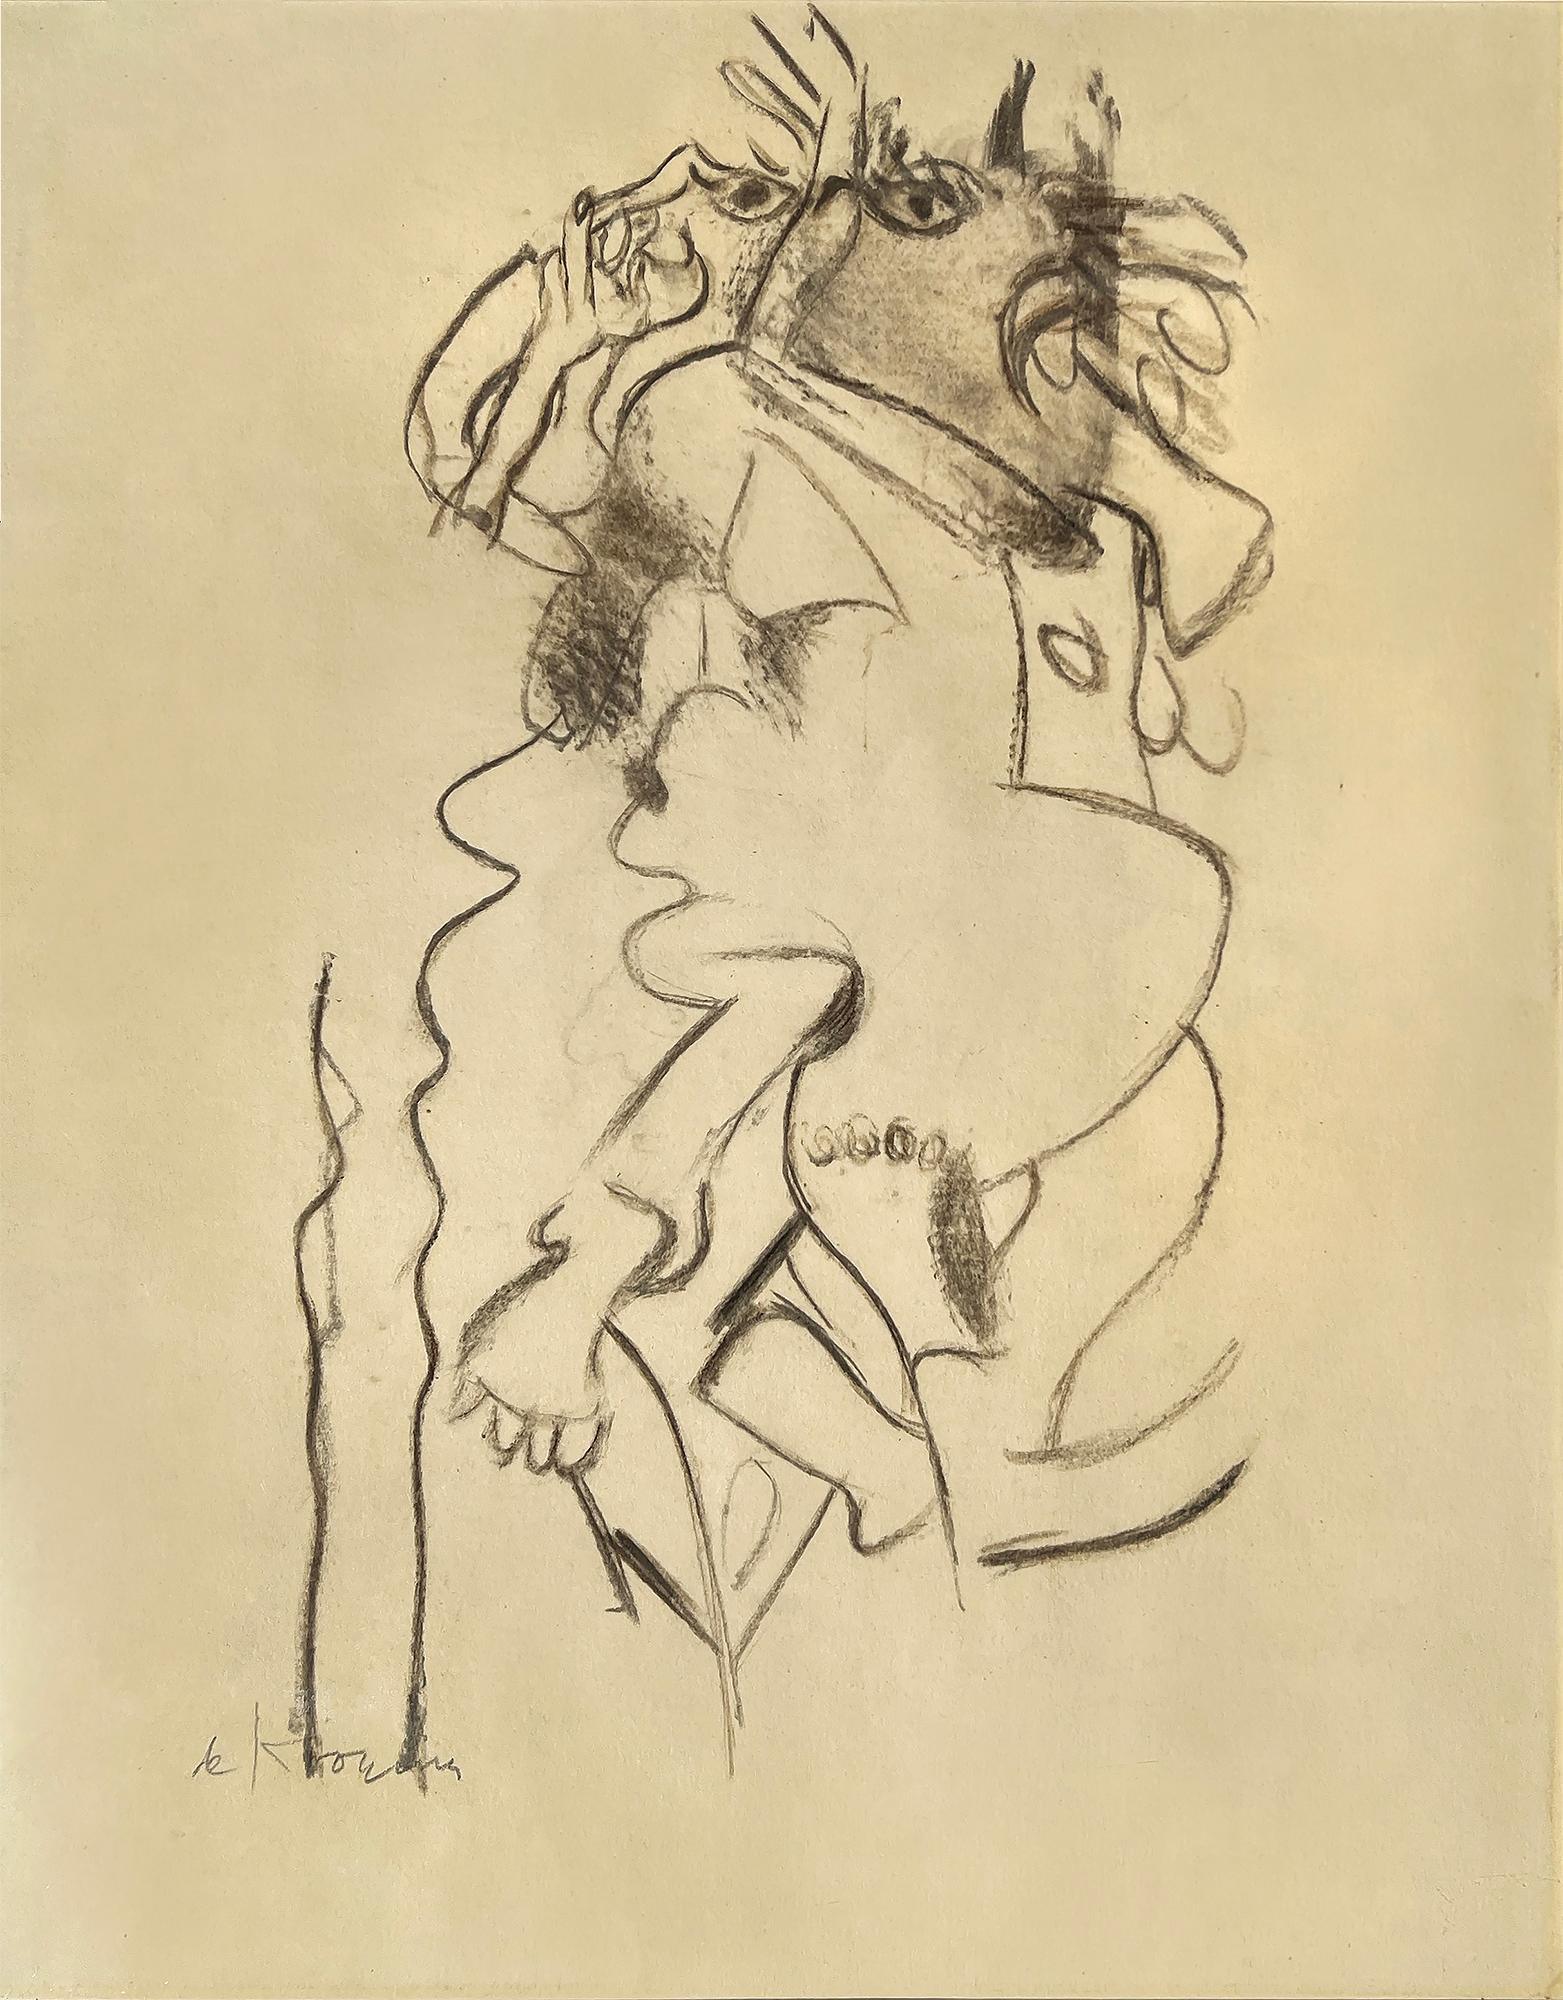 Willem de Kooning Abstract Drawing – Der Denker